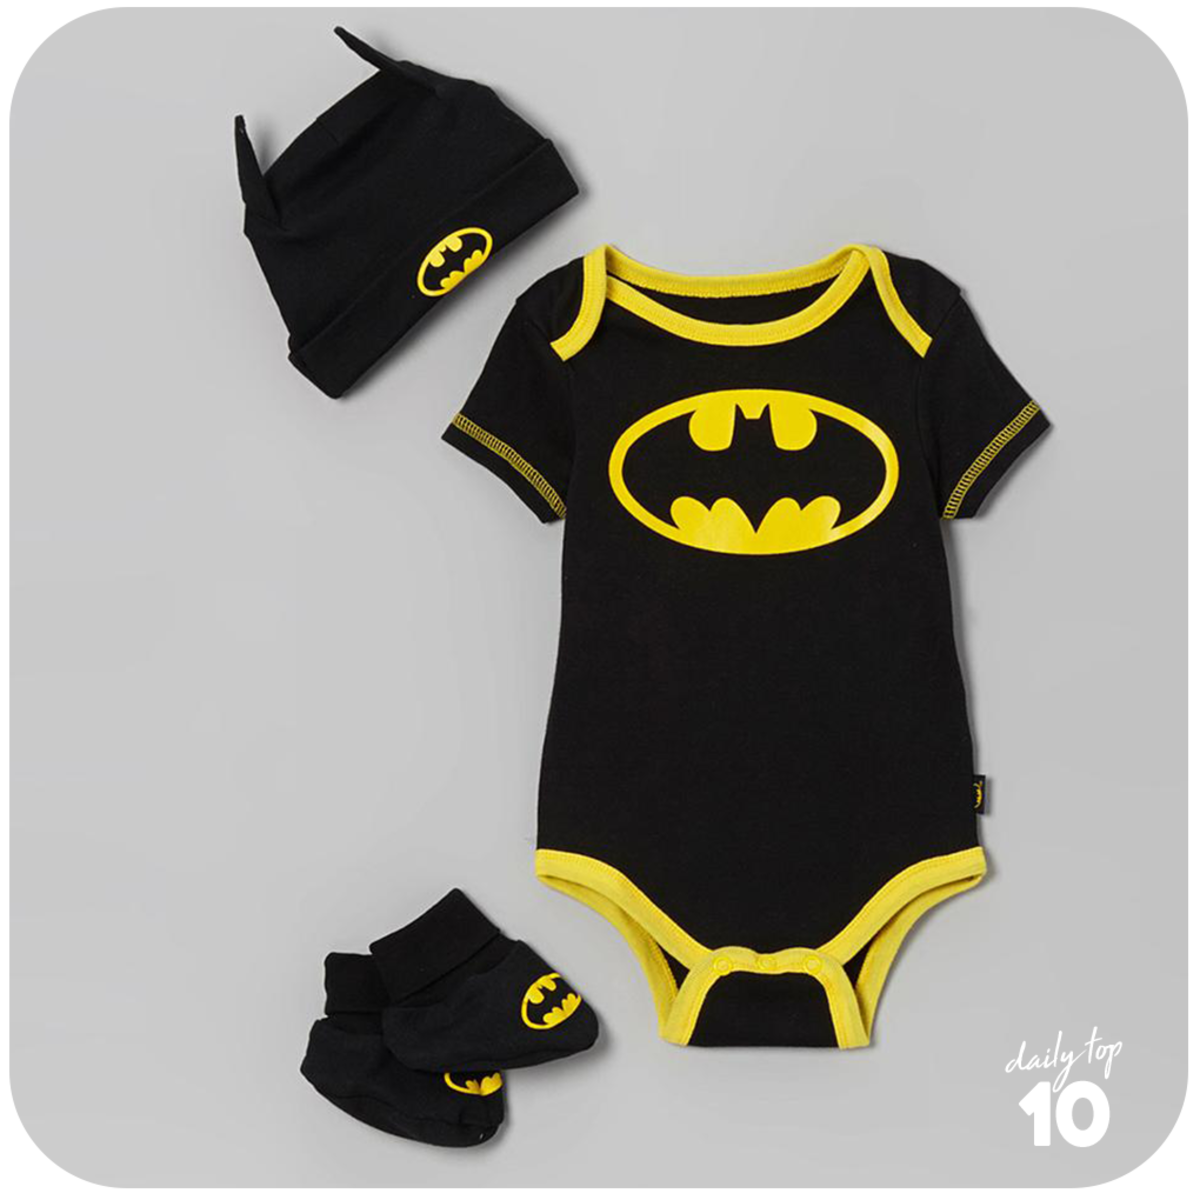 Batman Baby Costume